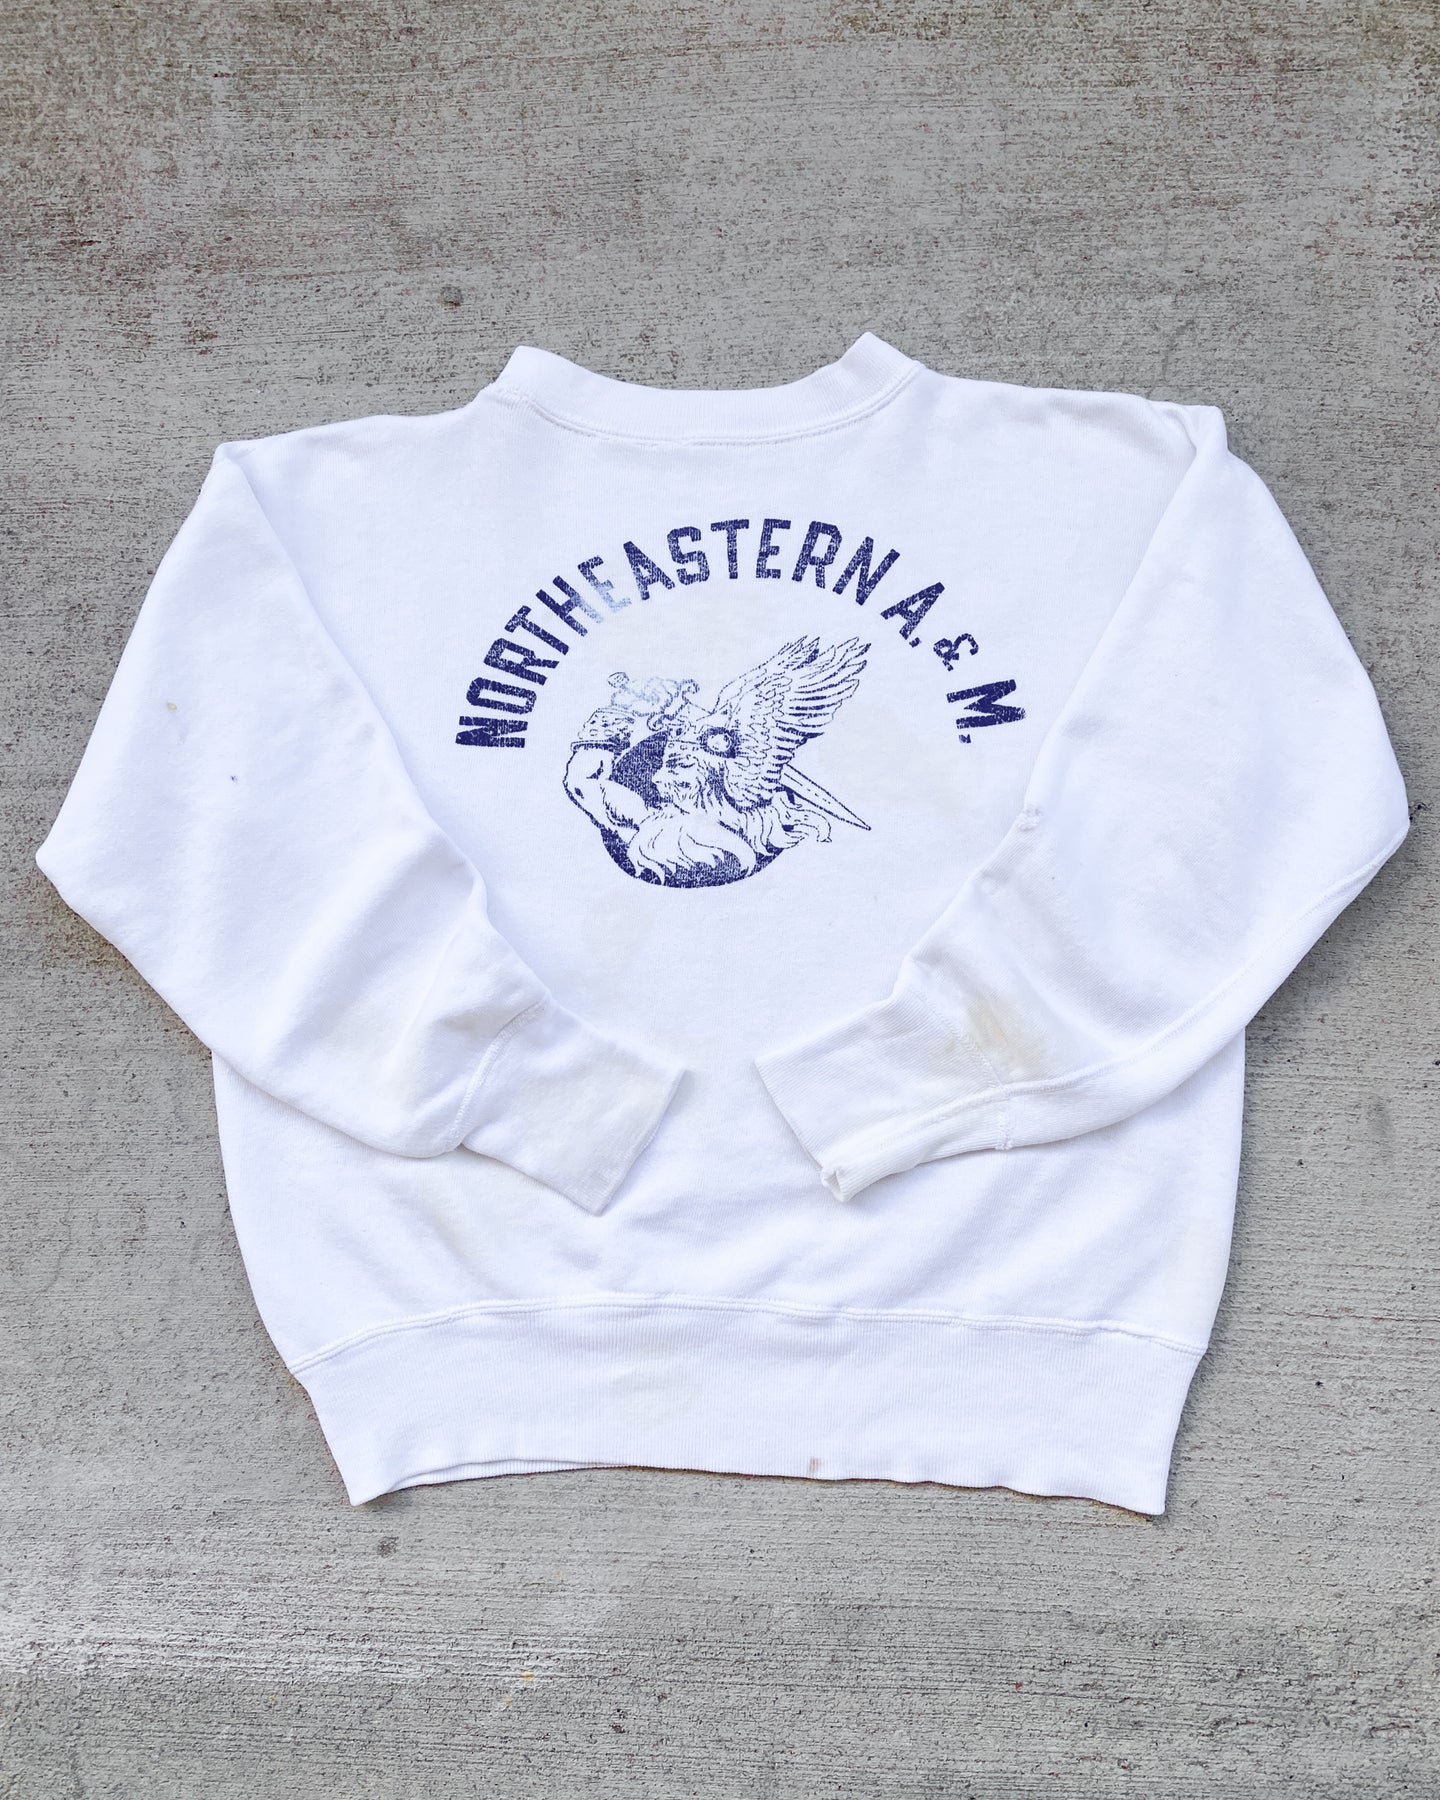 1950s Northeastern A&M Crewneck Sweatshirt - Size Small